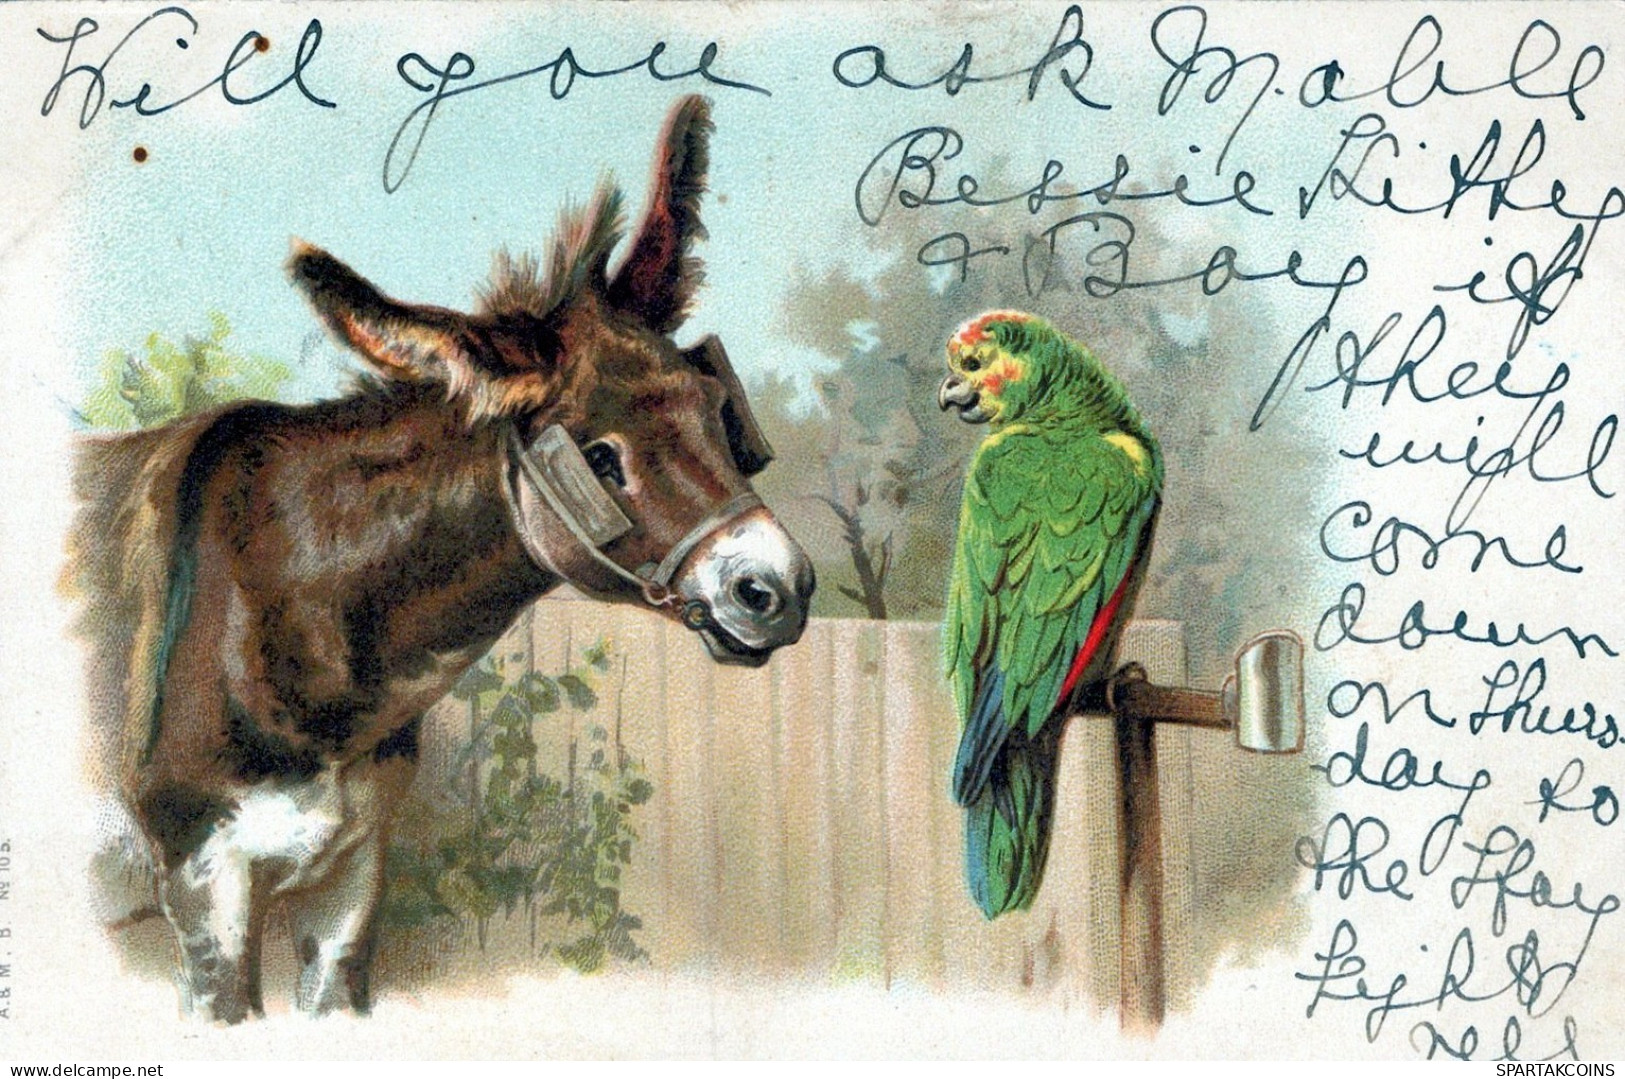 1902 ÂNE Animaux Vintage Antique CPA Carte Postale #PAA115.A - Donkeys